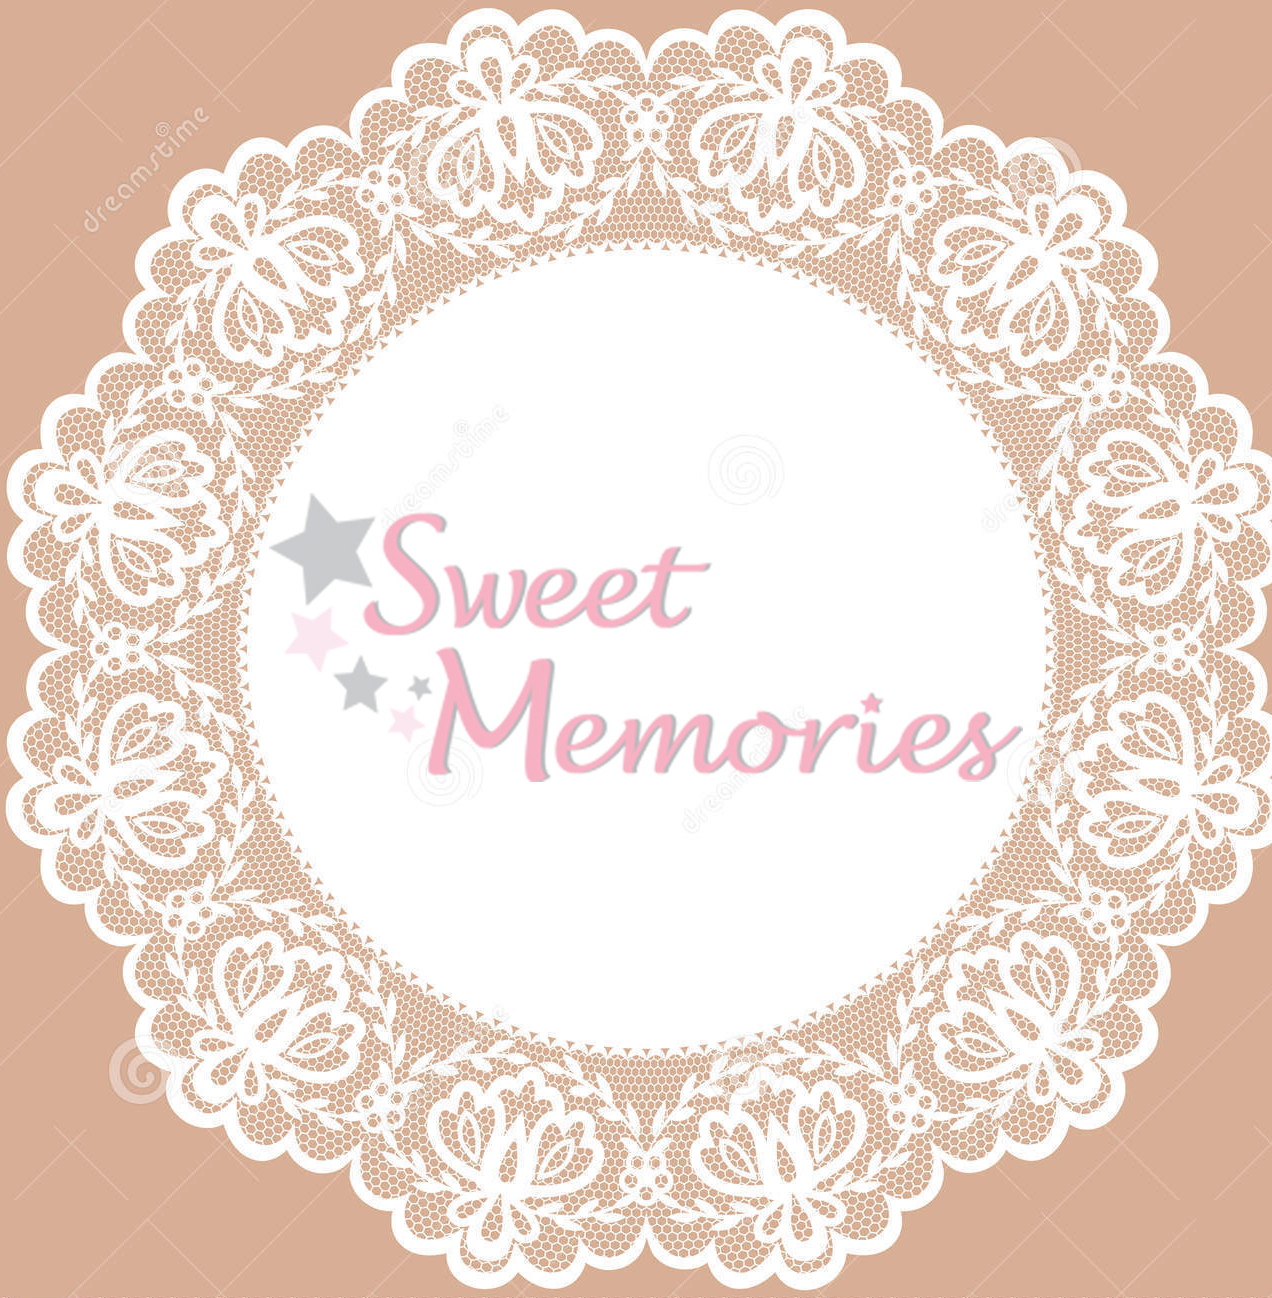 Sweet Memories - Σοφία Τσατσαρώνη, Προσκλητήρια, Ανθοστολισμός, Μπομπο